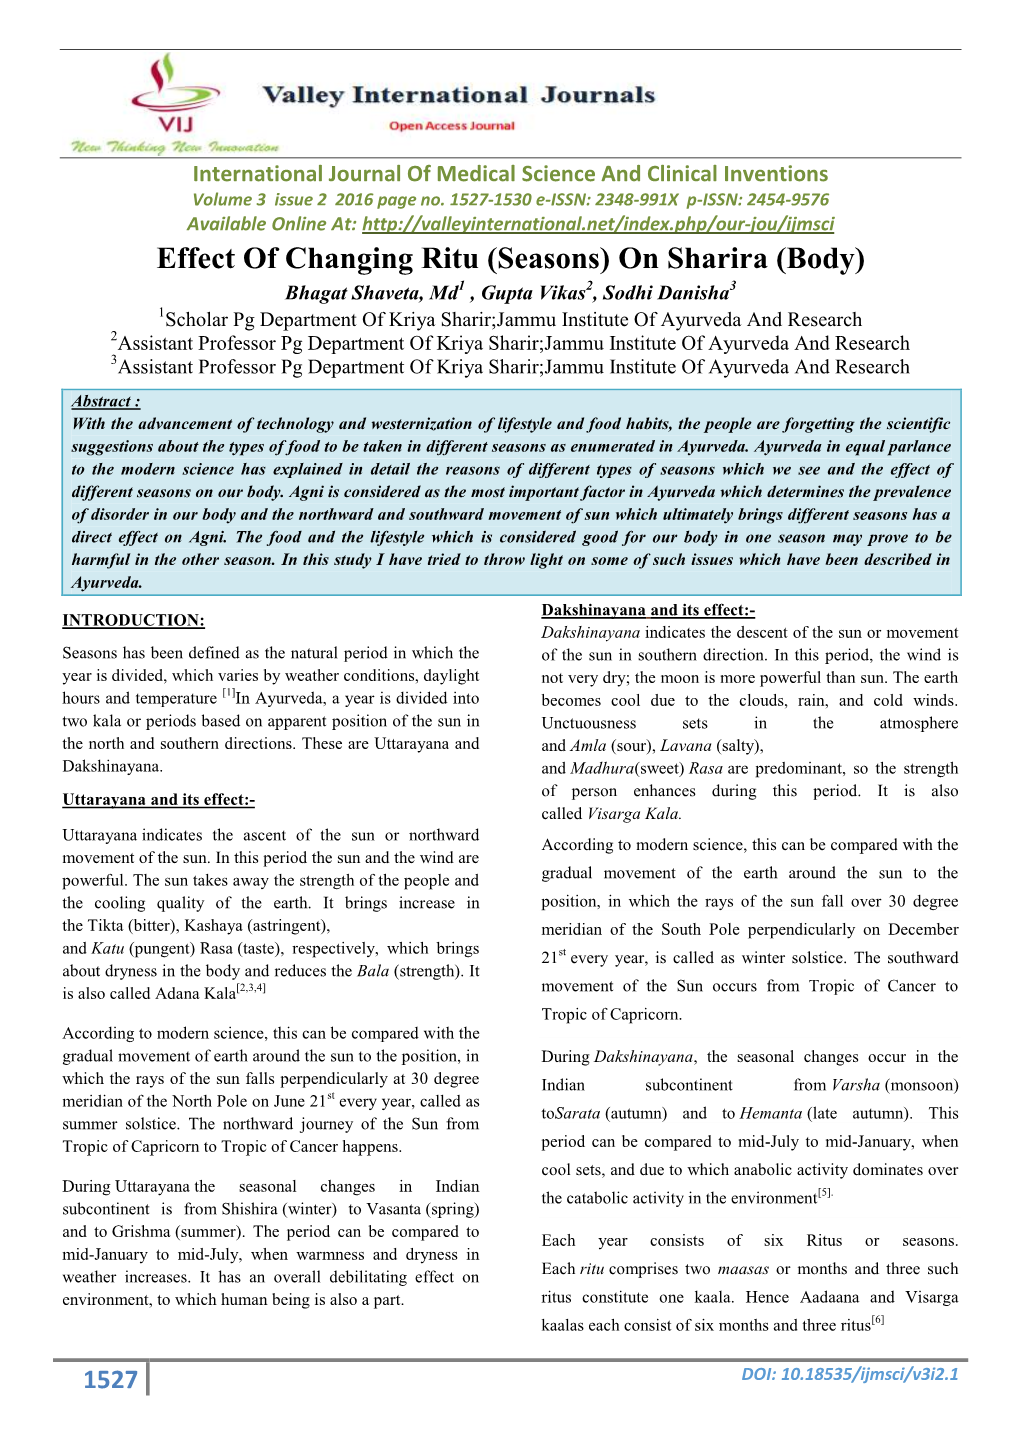 Effect of Changing Ritu (Seasons) on Sharira (Body)